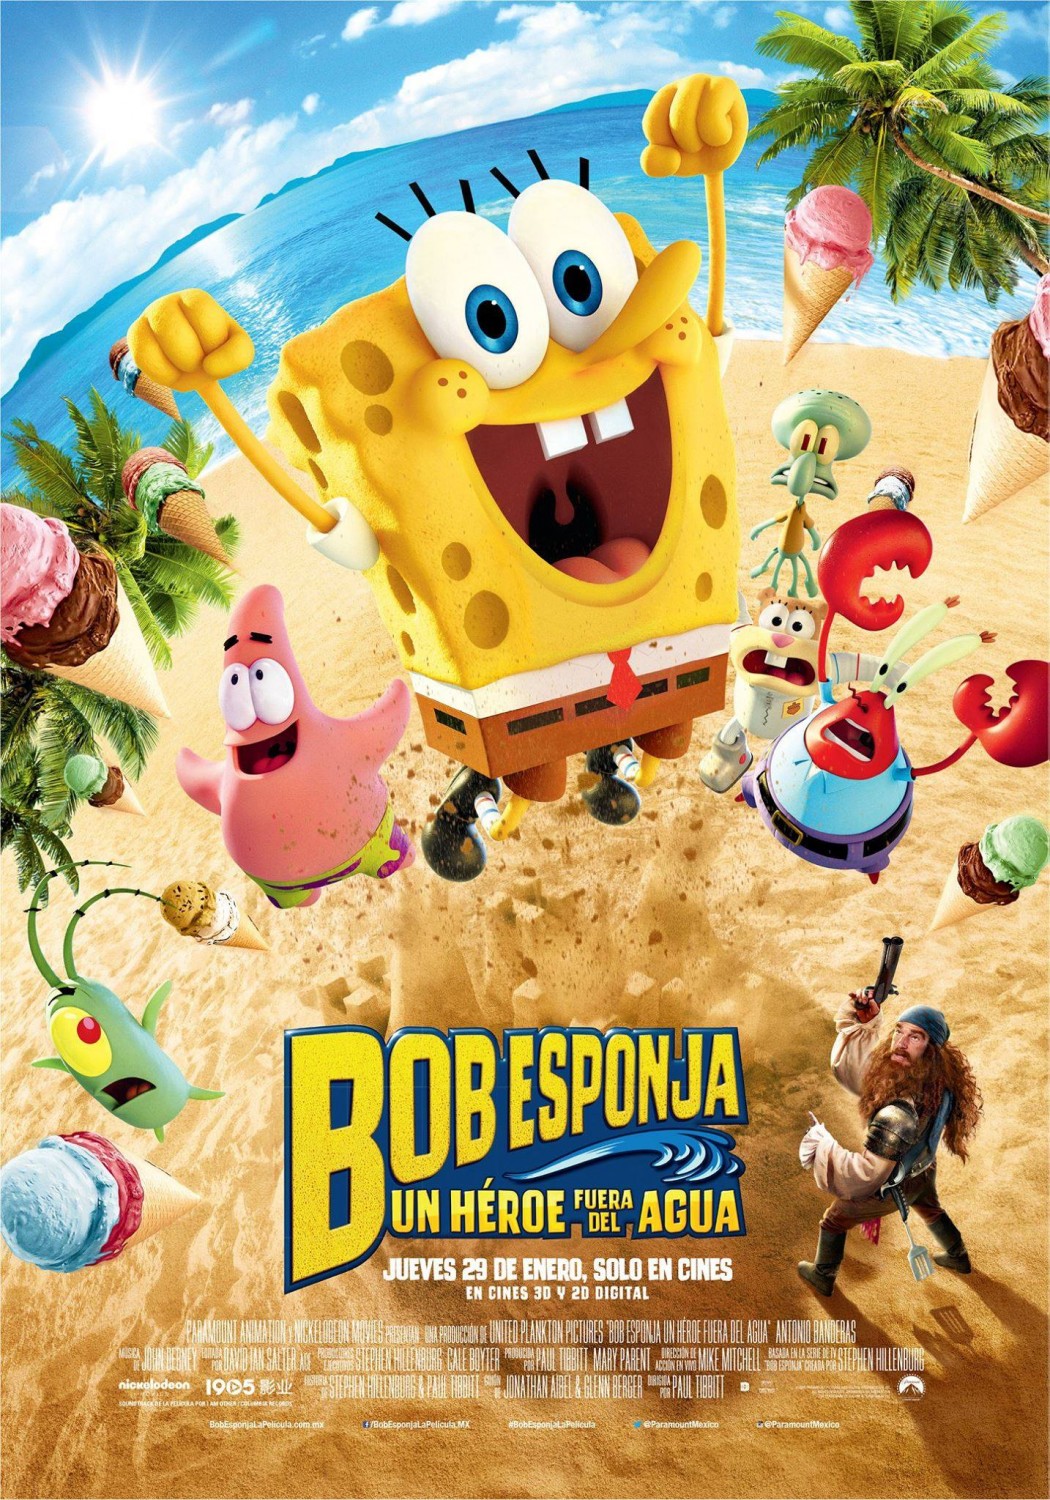 Extra Large Movie Poster Image for SpongeBob SquarePants 2 (#27 of 33)